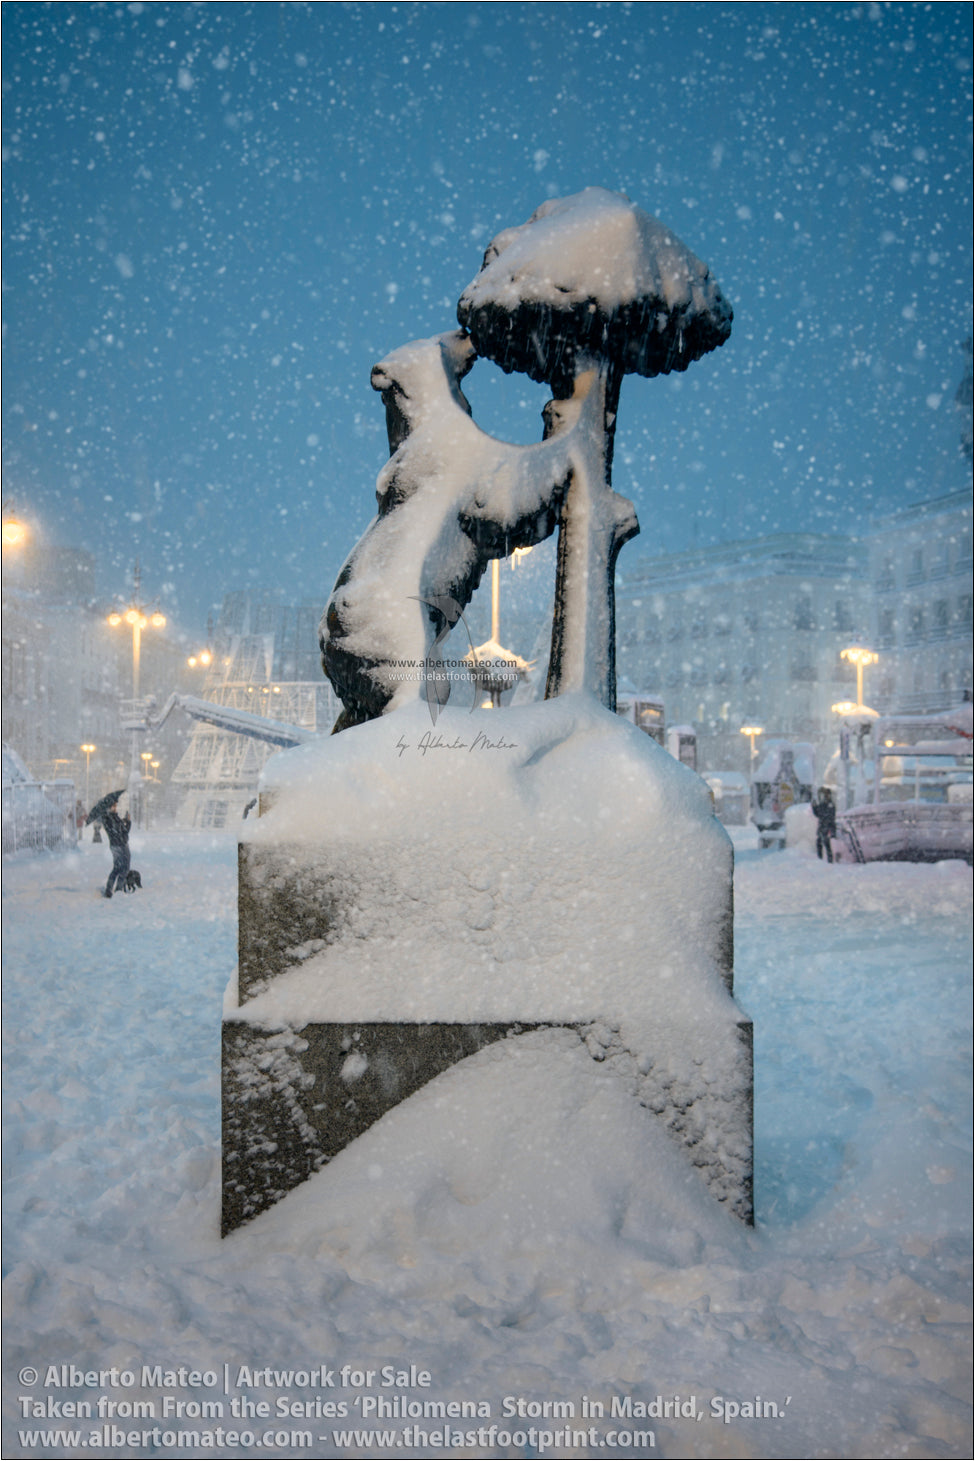 Bear Sculpture in Puerta del Sol during Filomena Winter Snow Storm, Madrid, Spain.